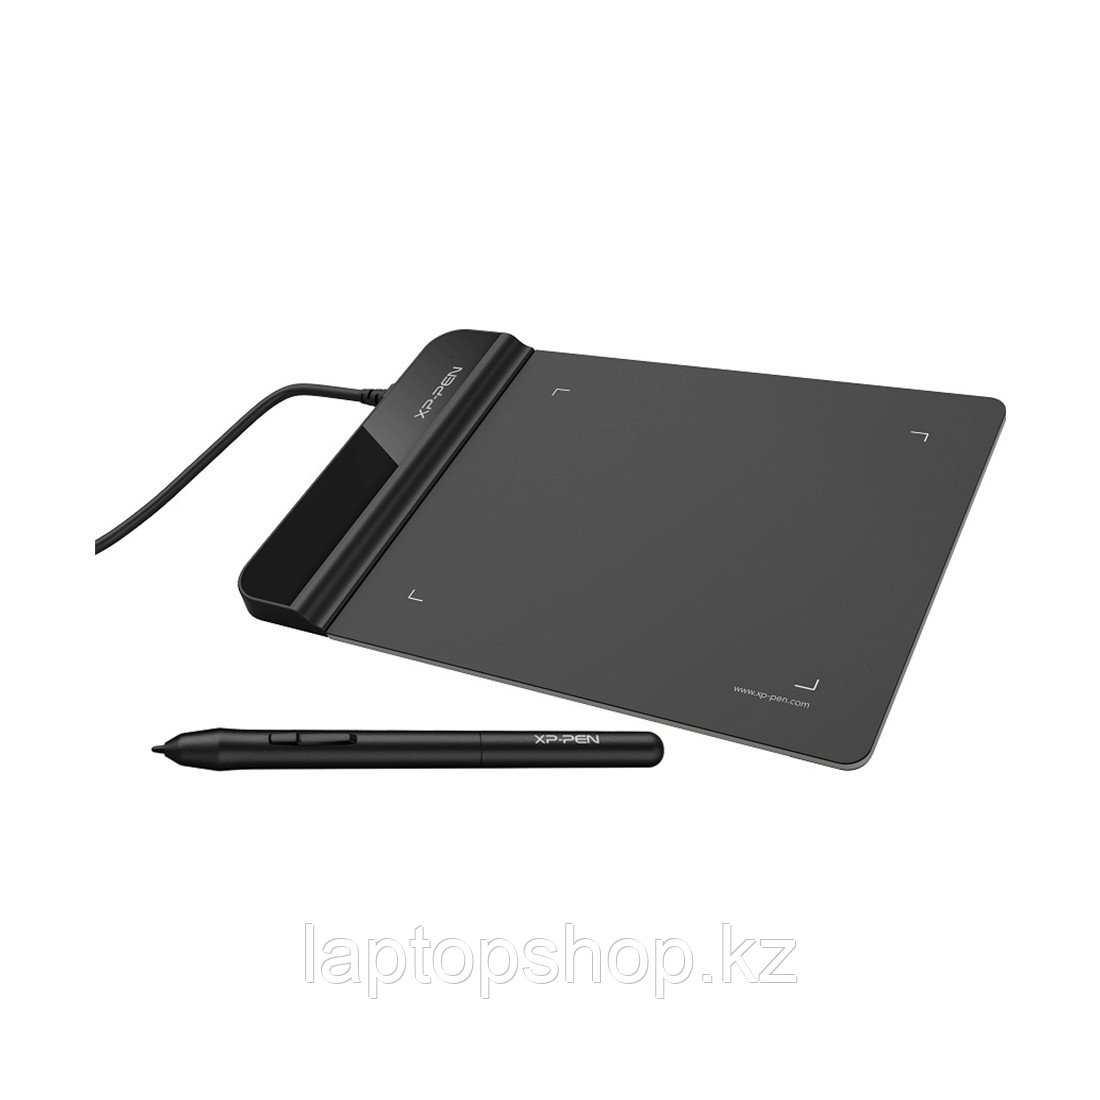 Графический планшет XP-Pen Star G430S, фото 1